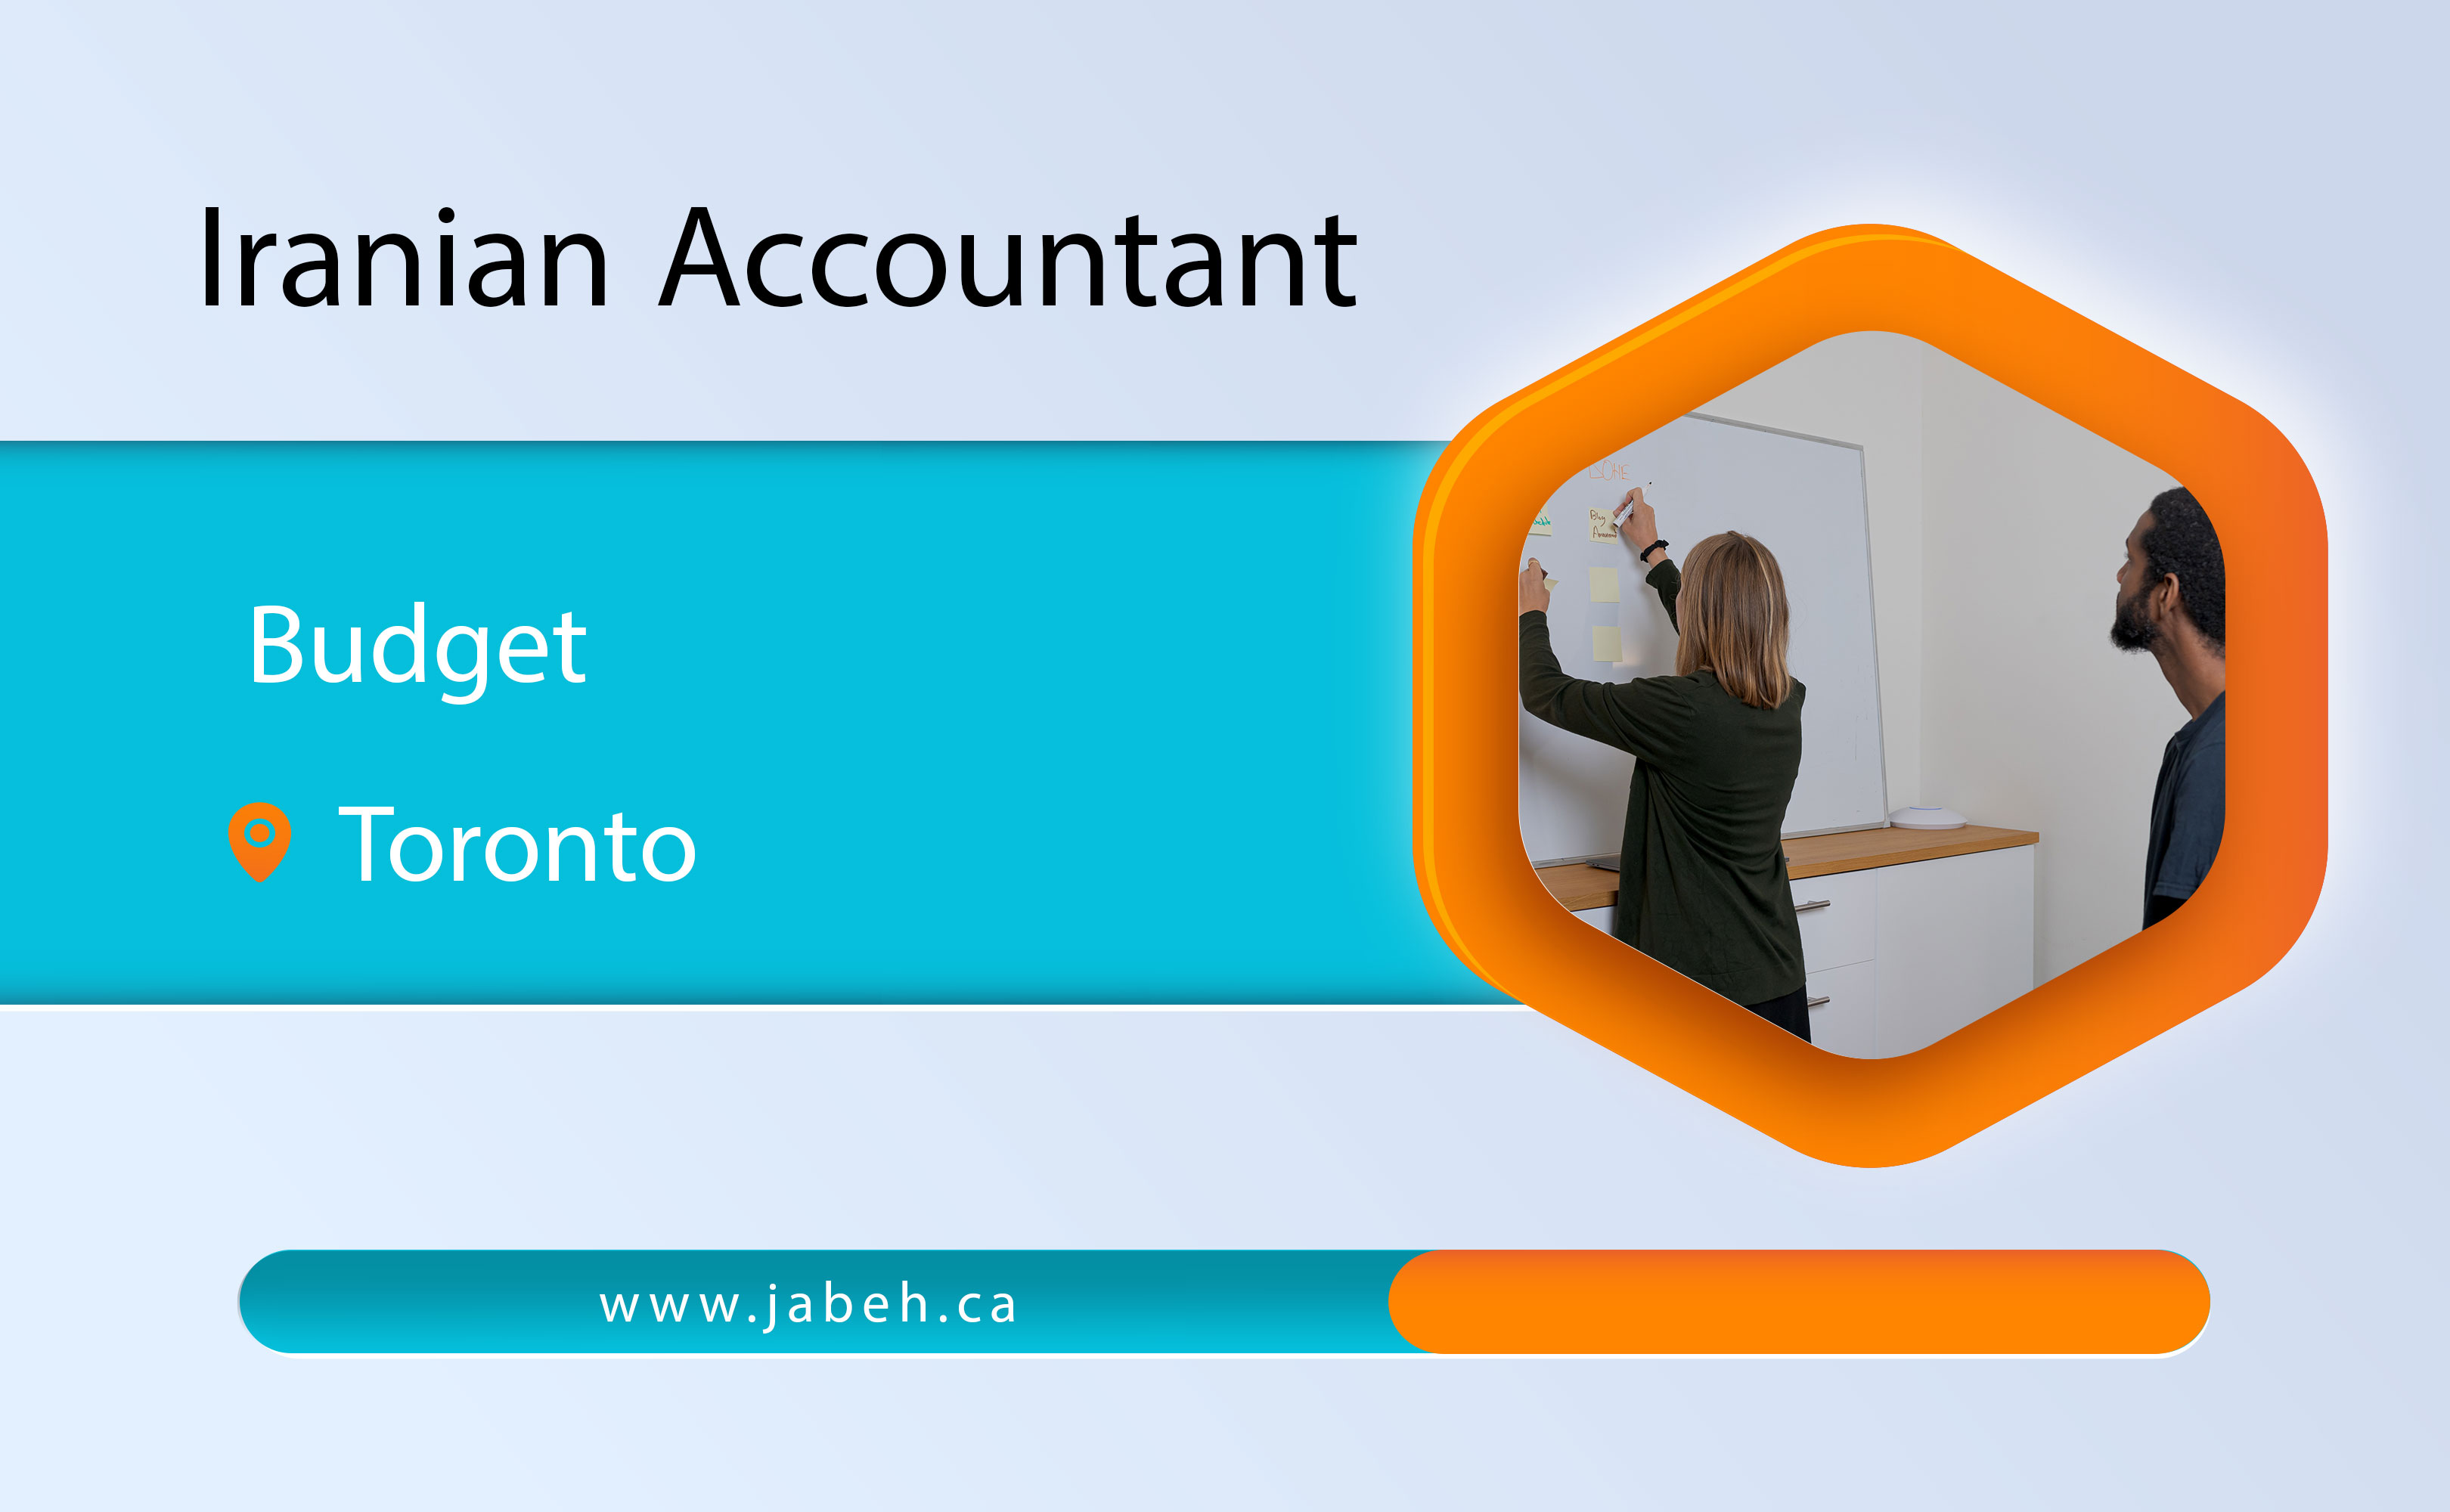 Iranian budget accounting in Toronto